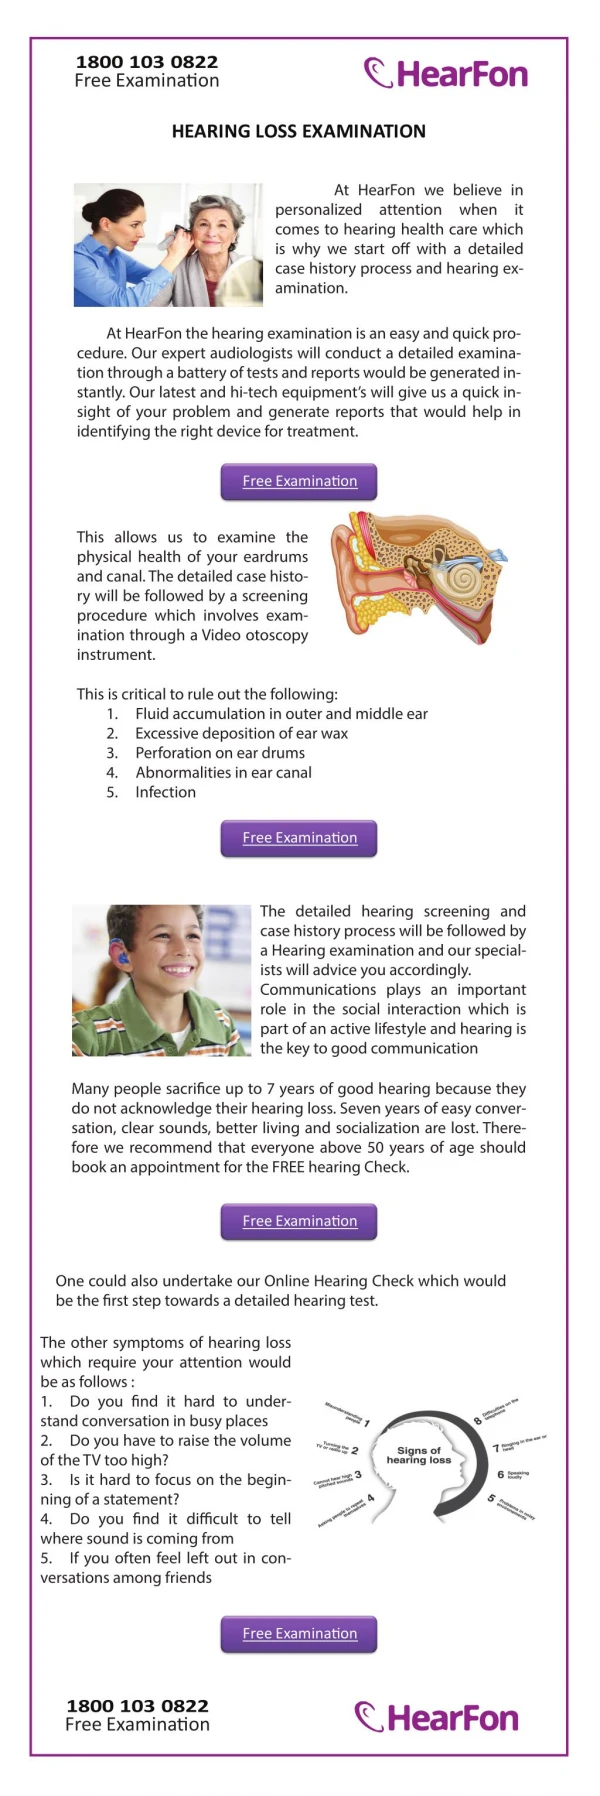 Digital hearing aids center in bangalore